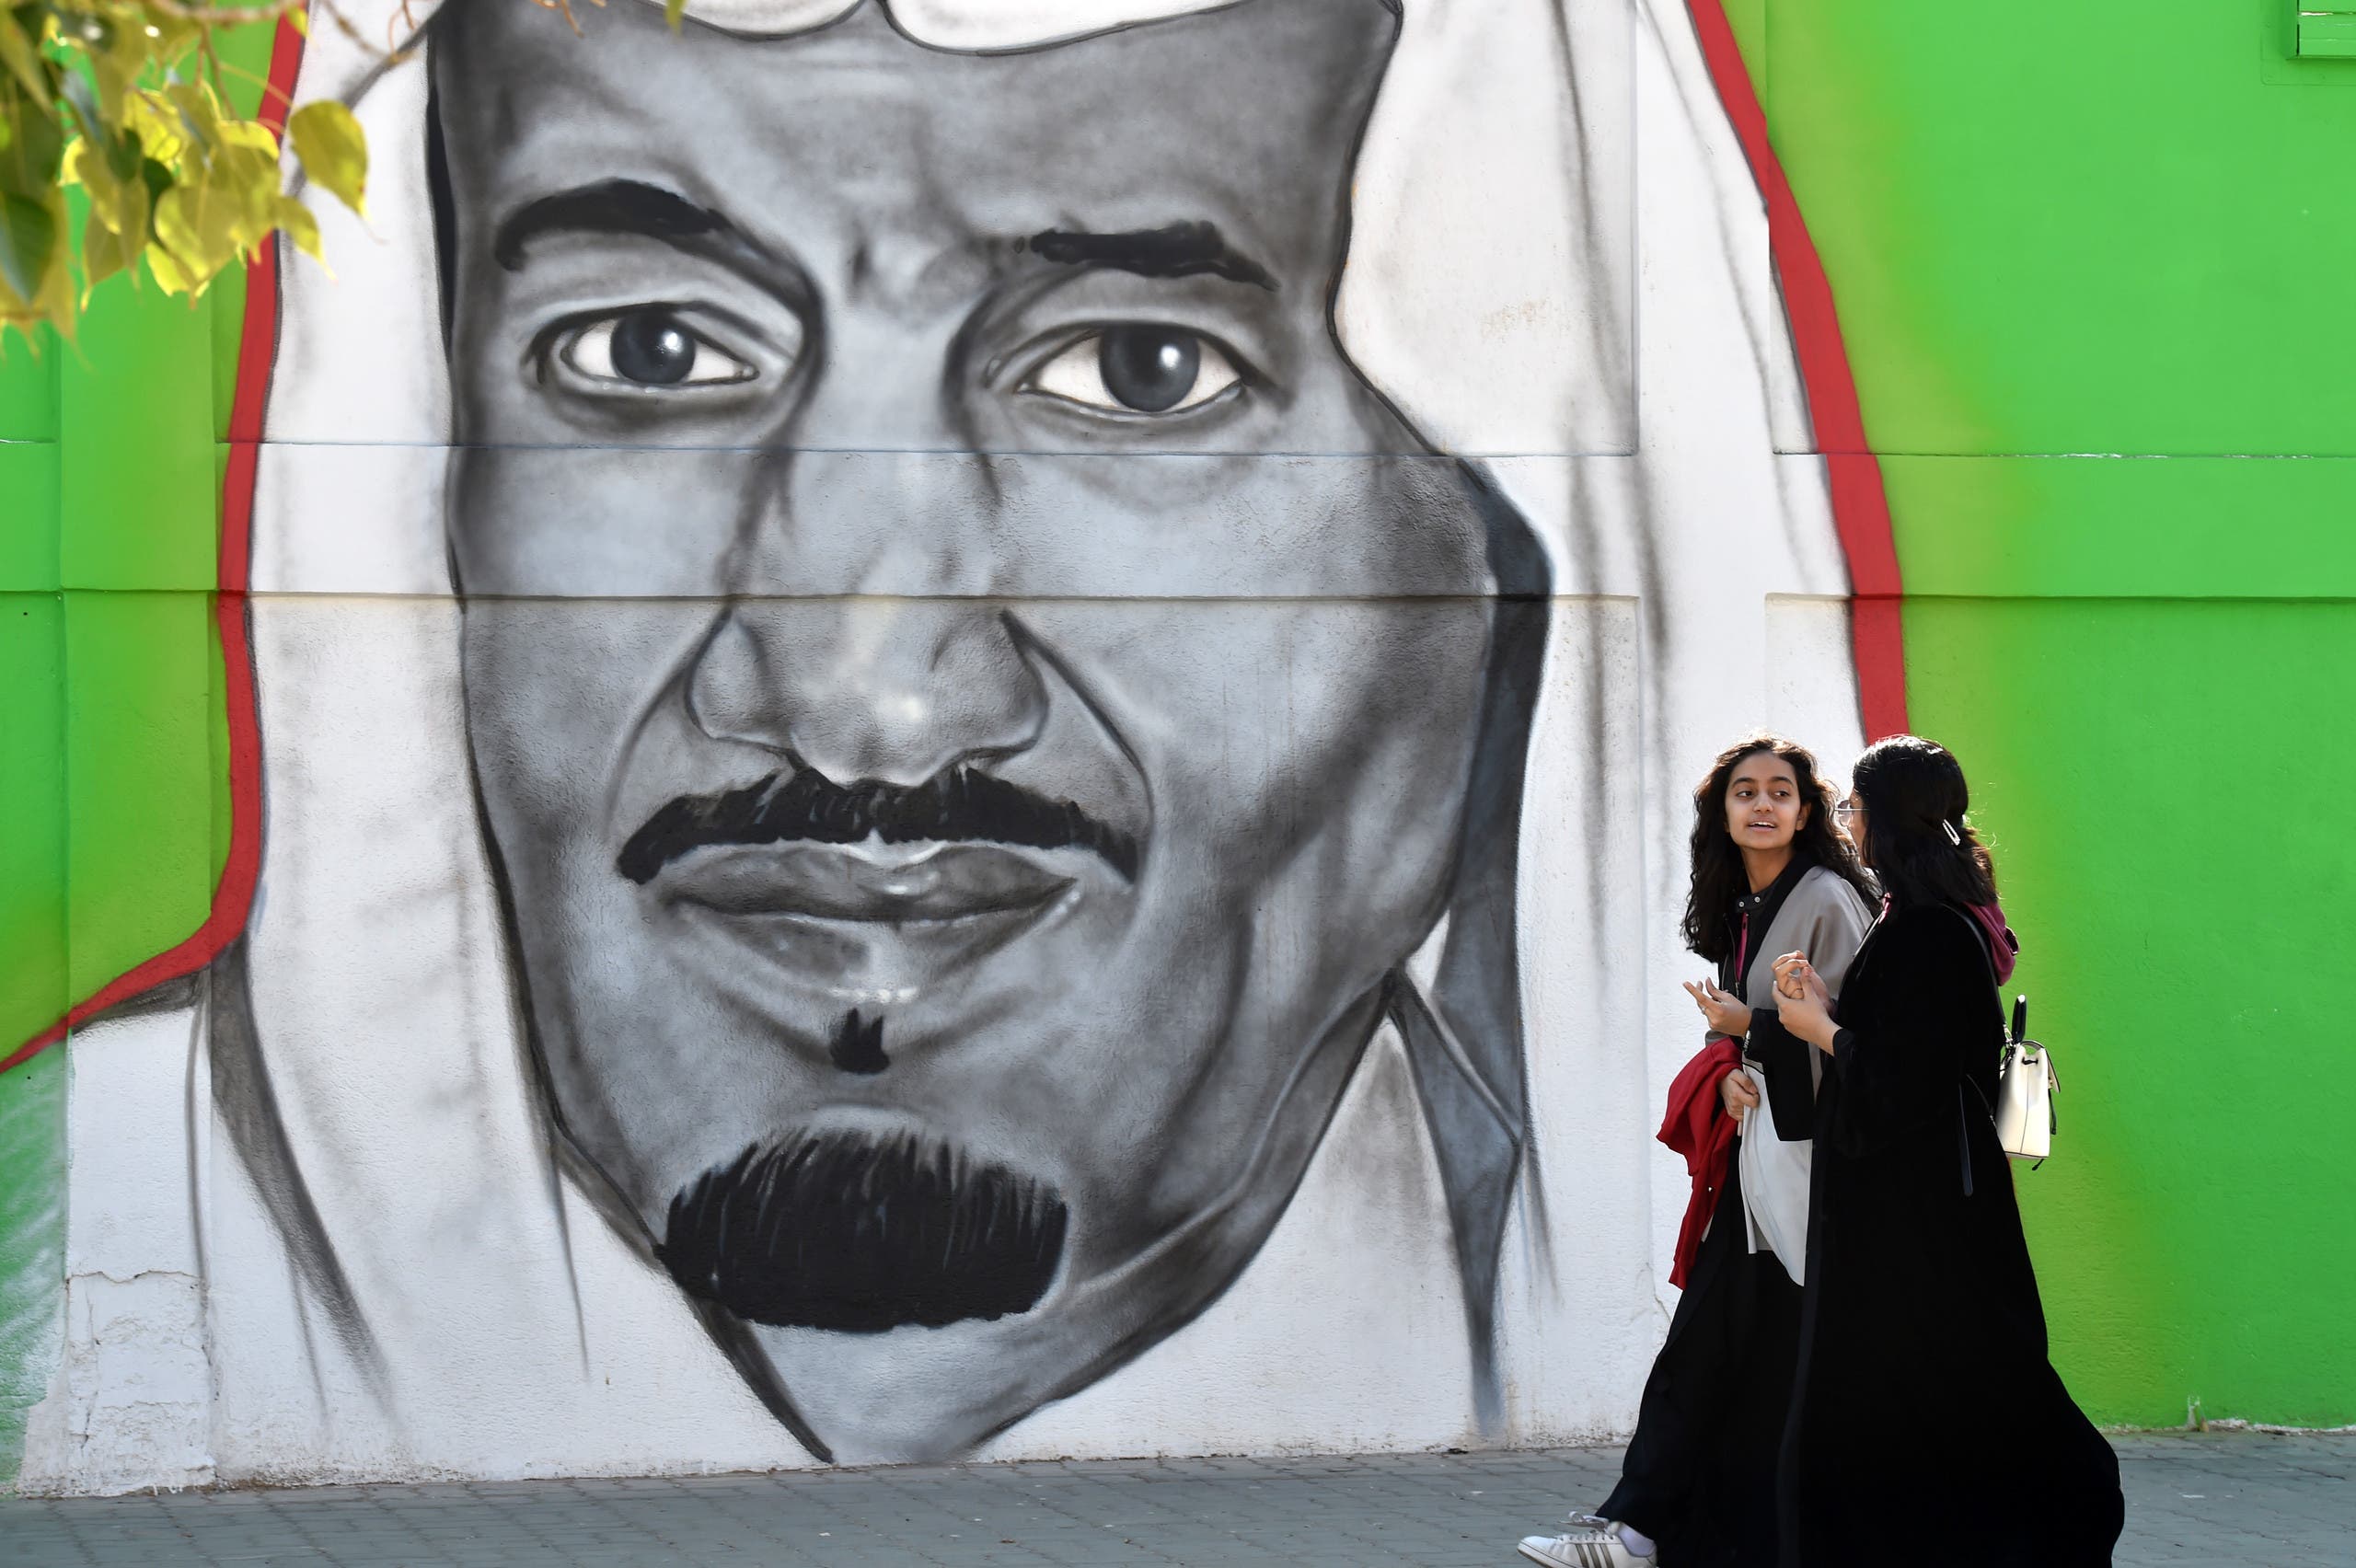 Saudi women walk past a mural painting showing King Salman bin Abdulaziz on Tahliya street in the capital Riyadh on December 5, 2019. (AFP)